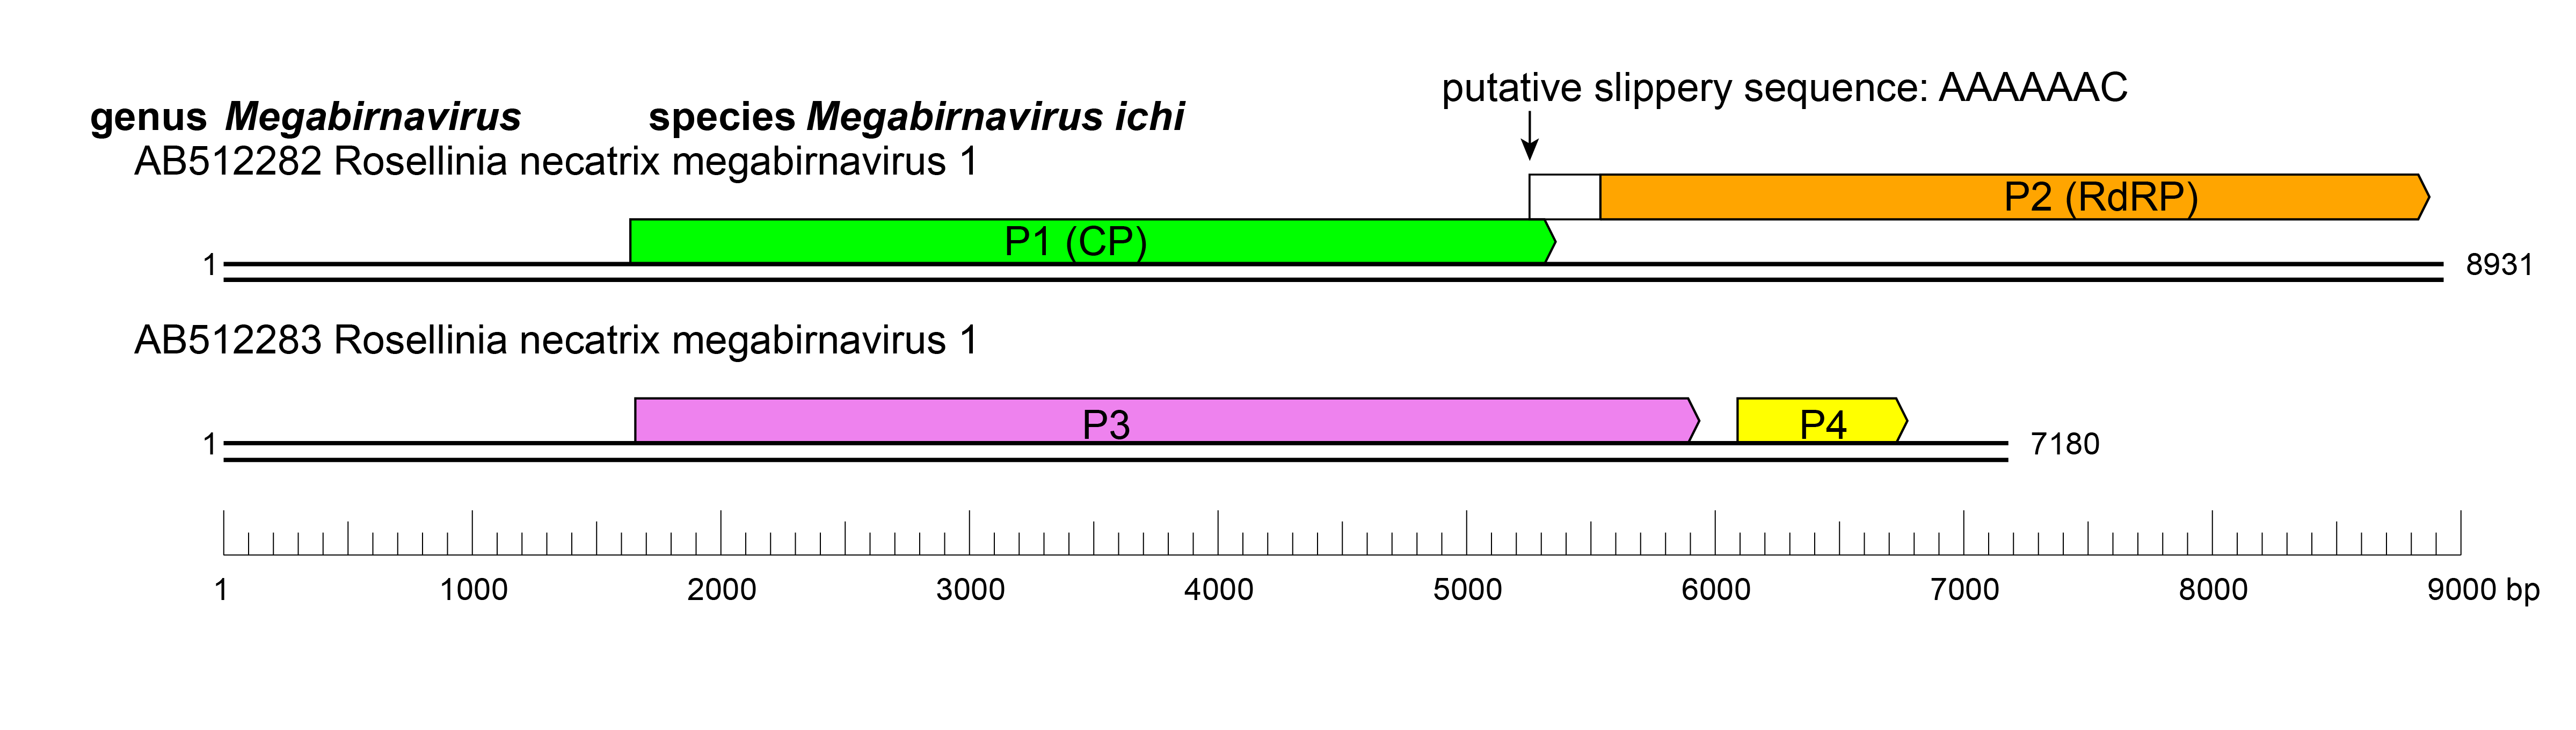 Megabirnaviridae genome